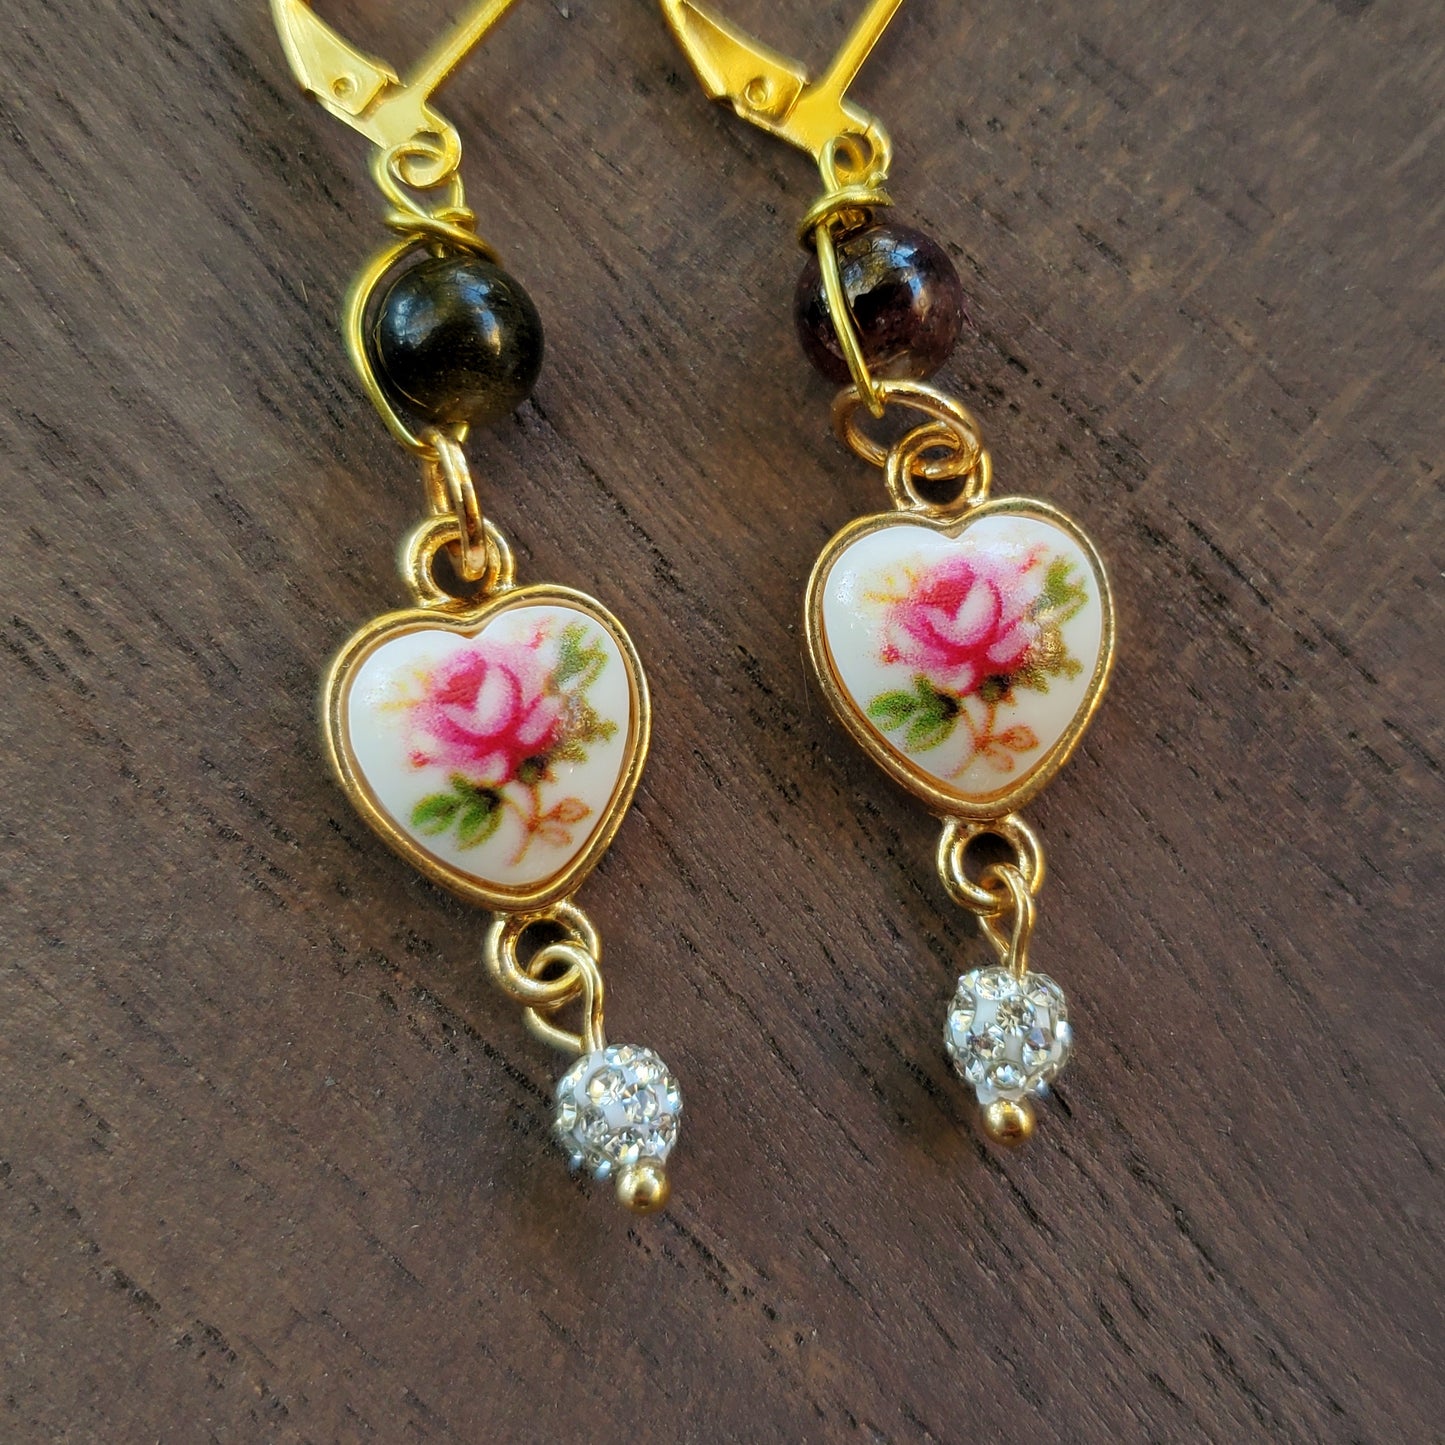 Vintage-Style Flower Heart Earrings with Tigers Eye